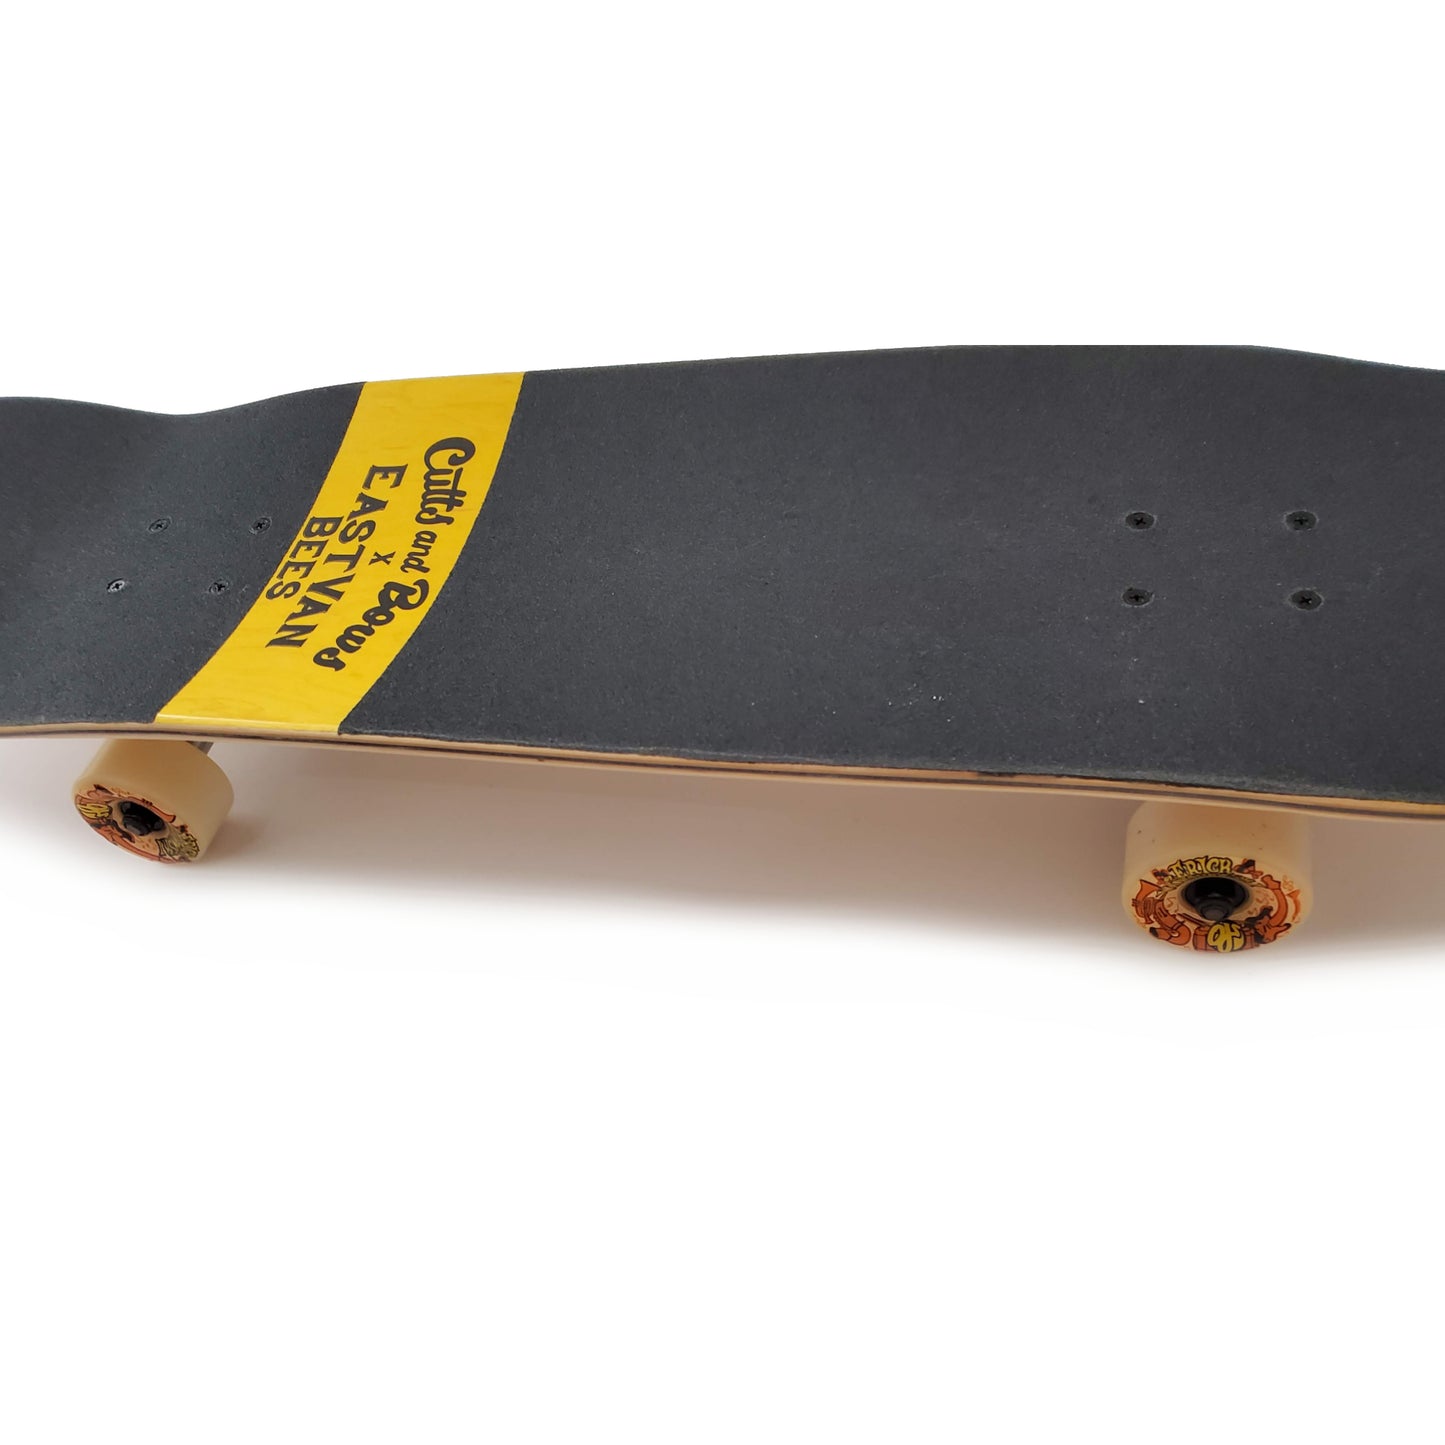 Cutts & Bows x East Van Bees - Custom Complete Cruiser Skateboard - 9.12"